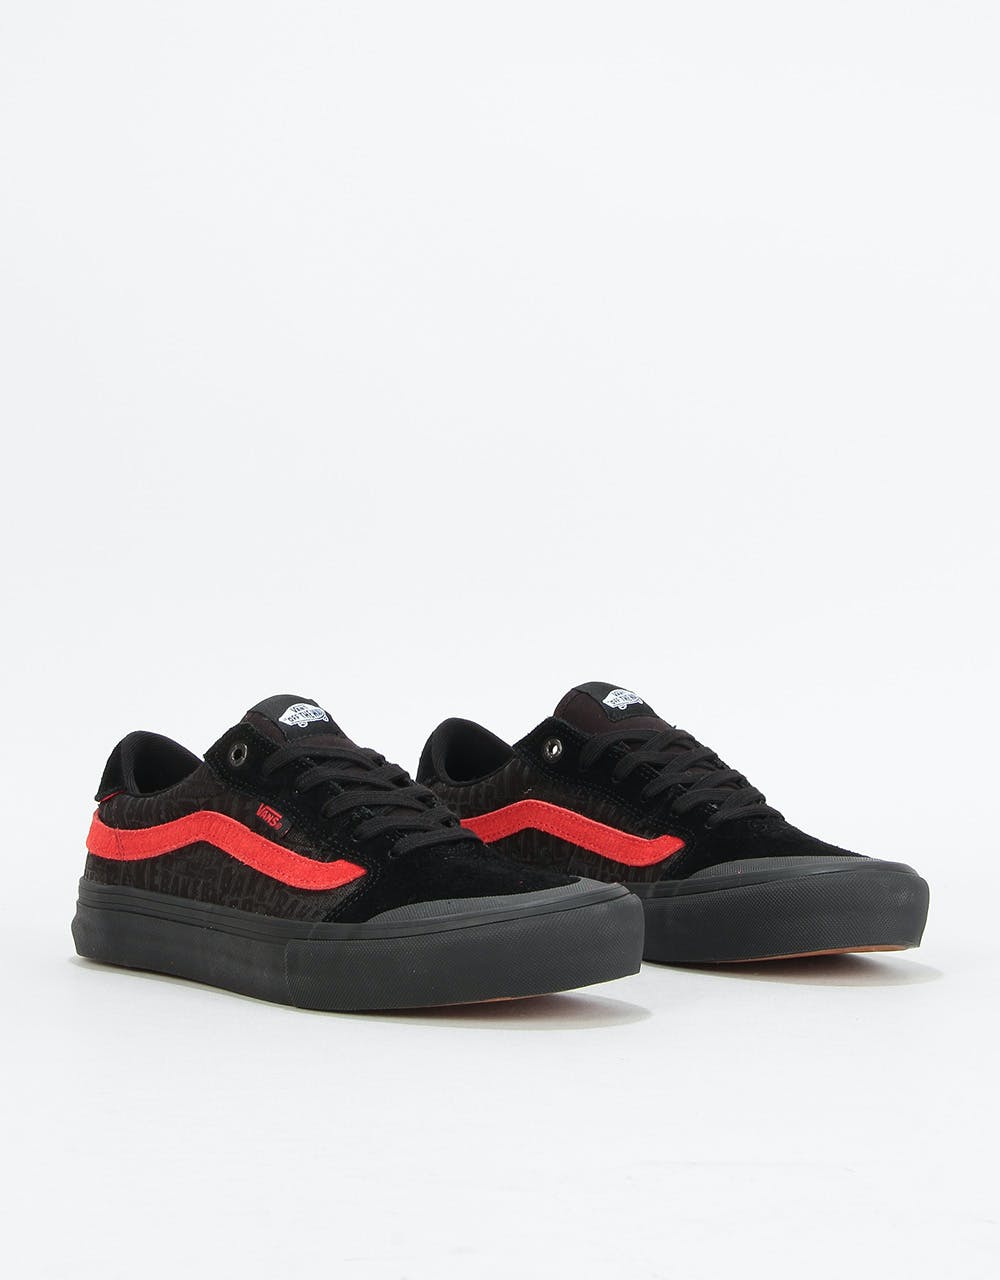 Vans Style 112 Pro Skate Shoes - (Baker) Black/Black/Red – Route One